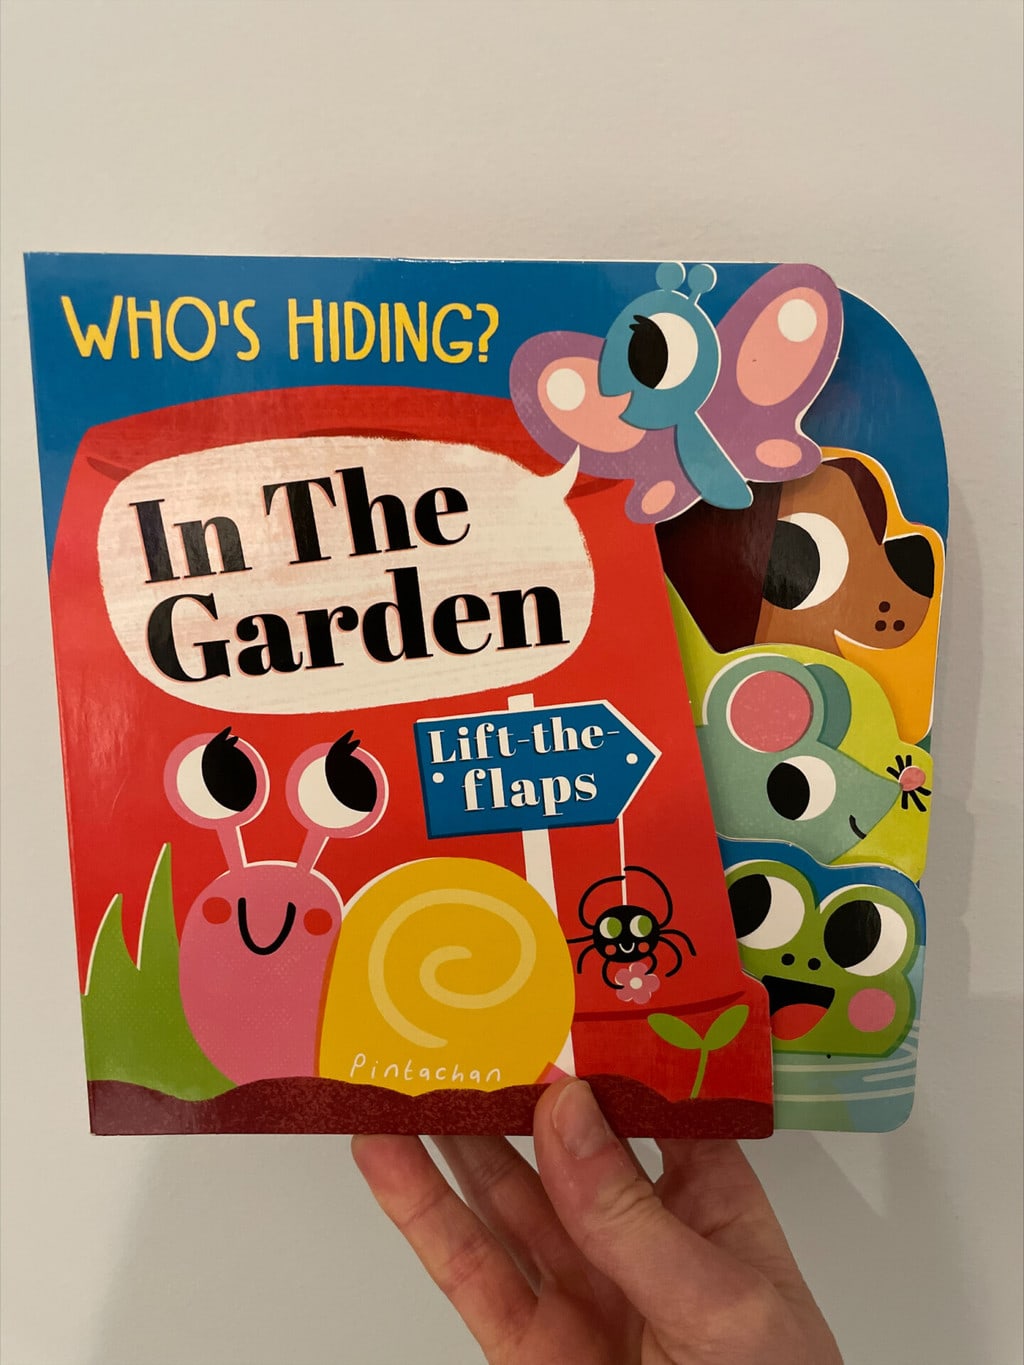 Who’s Hiding? In the Garden – Amelia Hepworth (author), Pintachan (illustrator), Little Tiger Press Ltd (publisher)